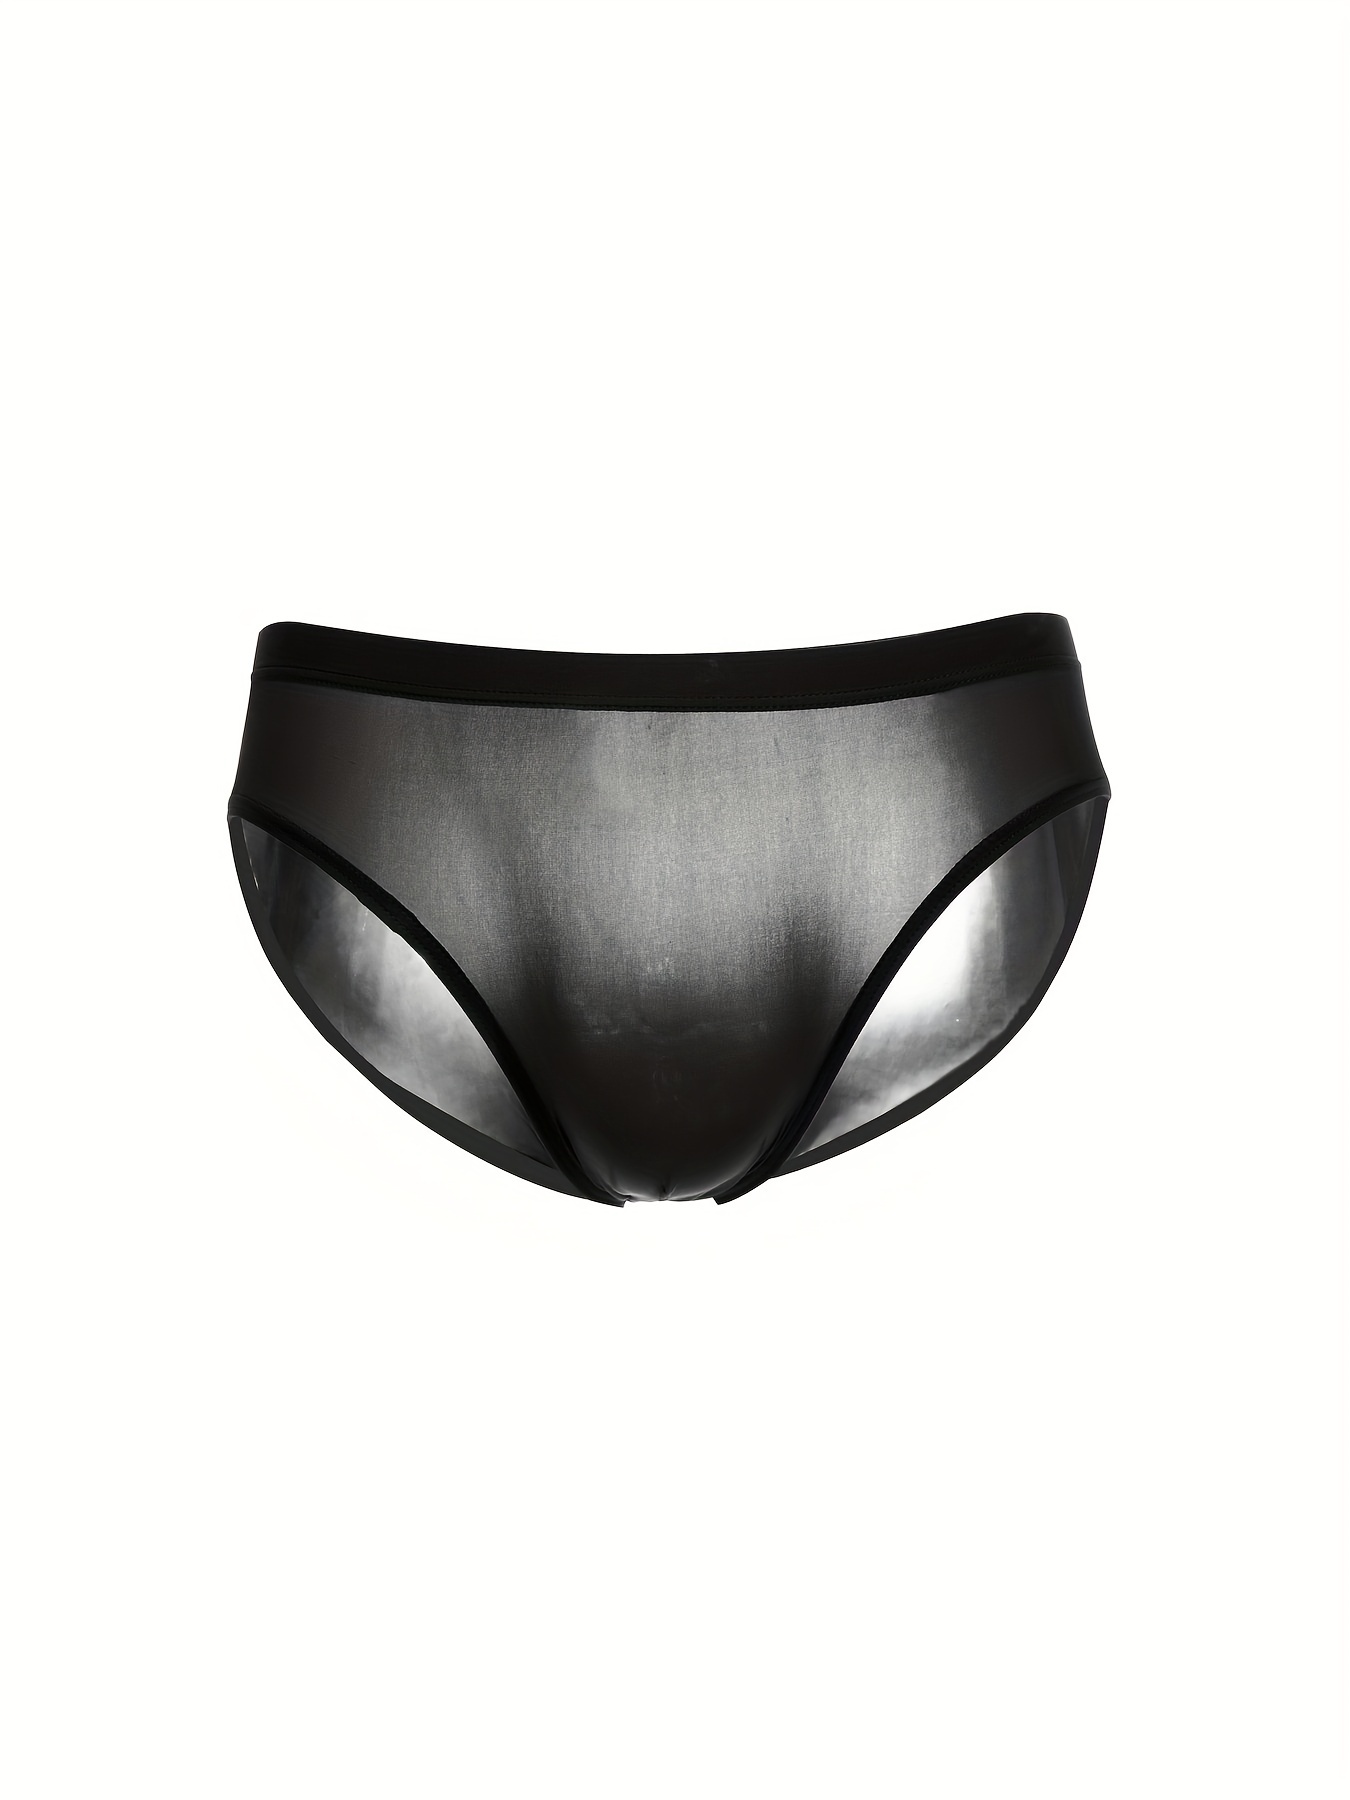 blacked underwear, Blacked Boxers Sex Panties Sexy Panties Transparent  Men's T Pants Underwear Briefs Mens Underwear Knit Boxers